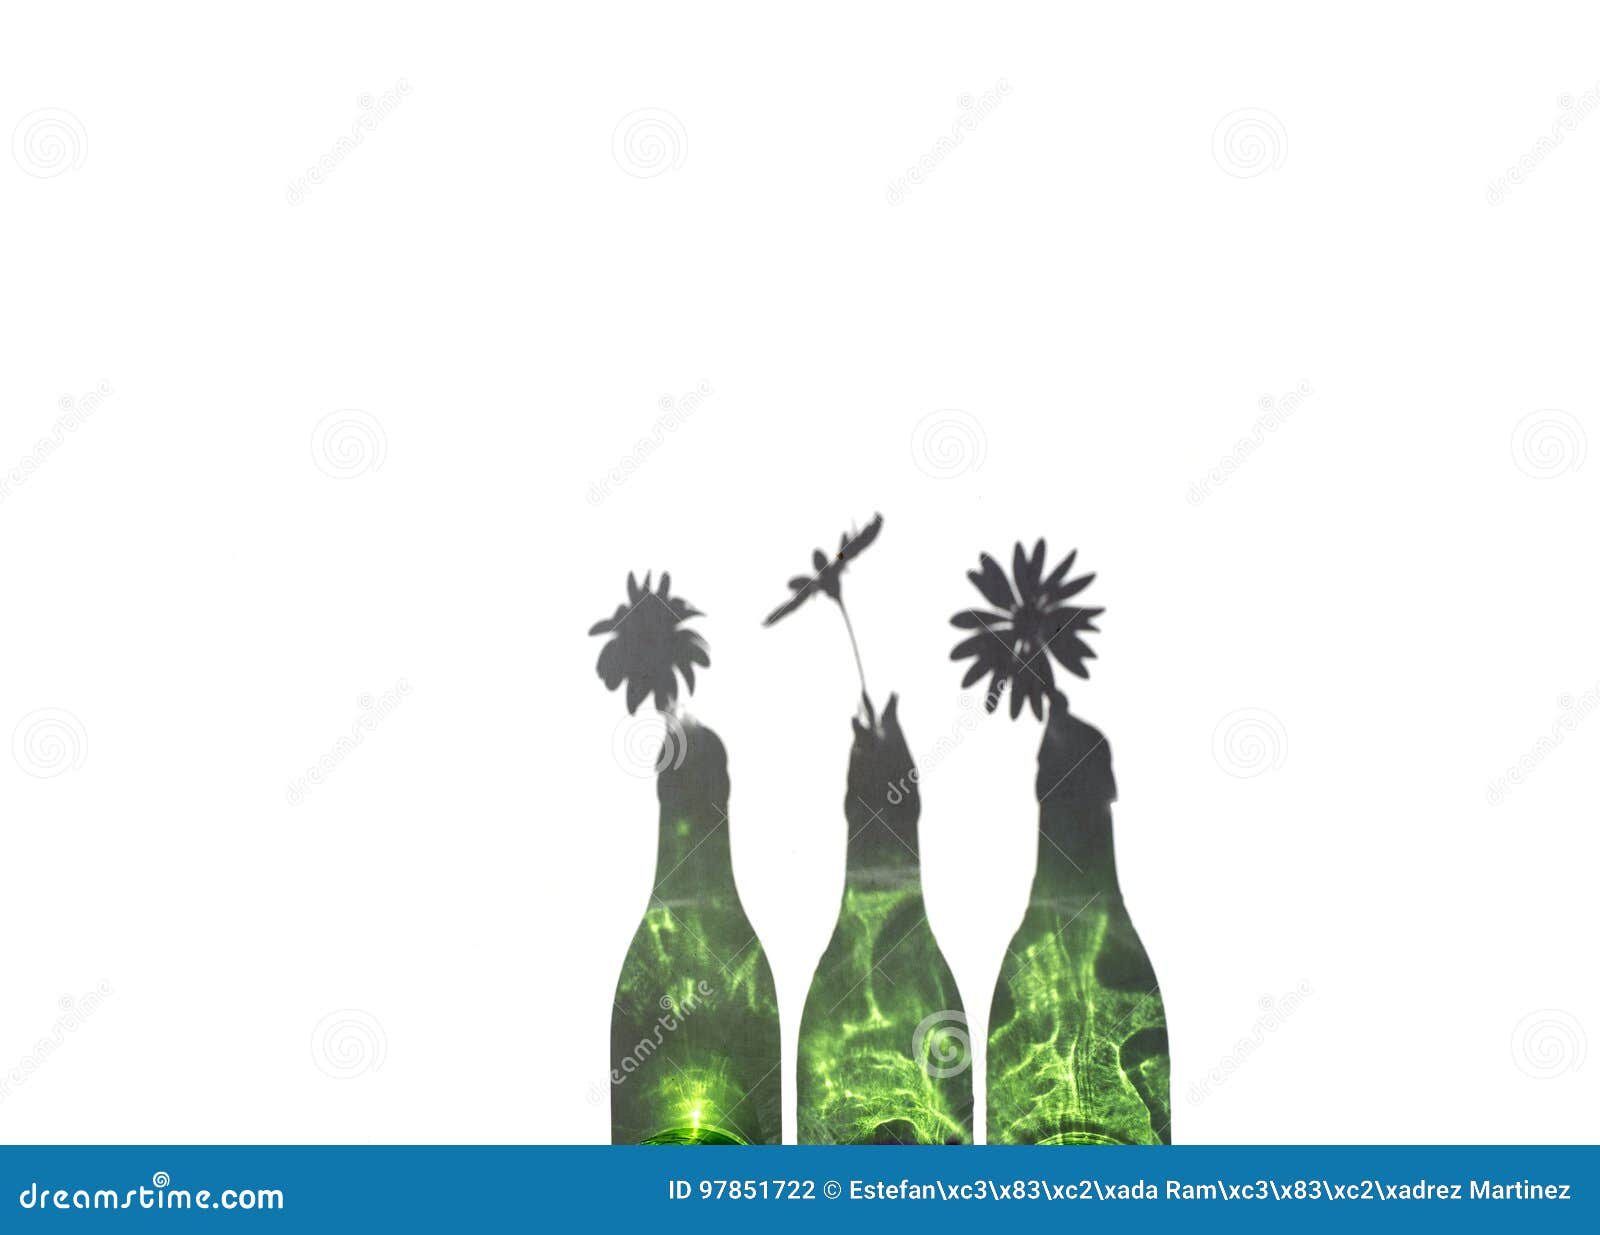 three daisies in green bottle